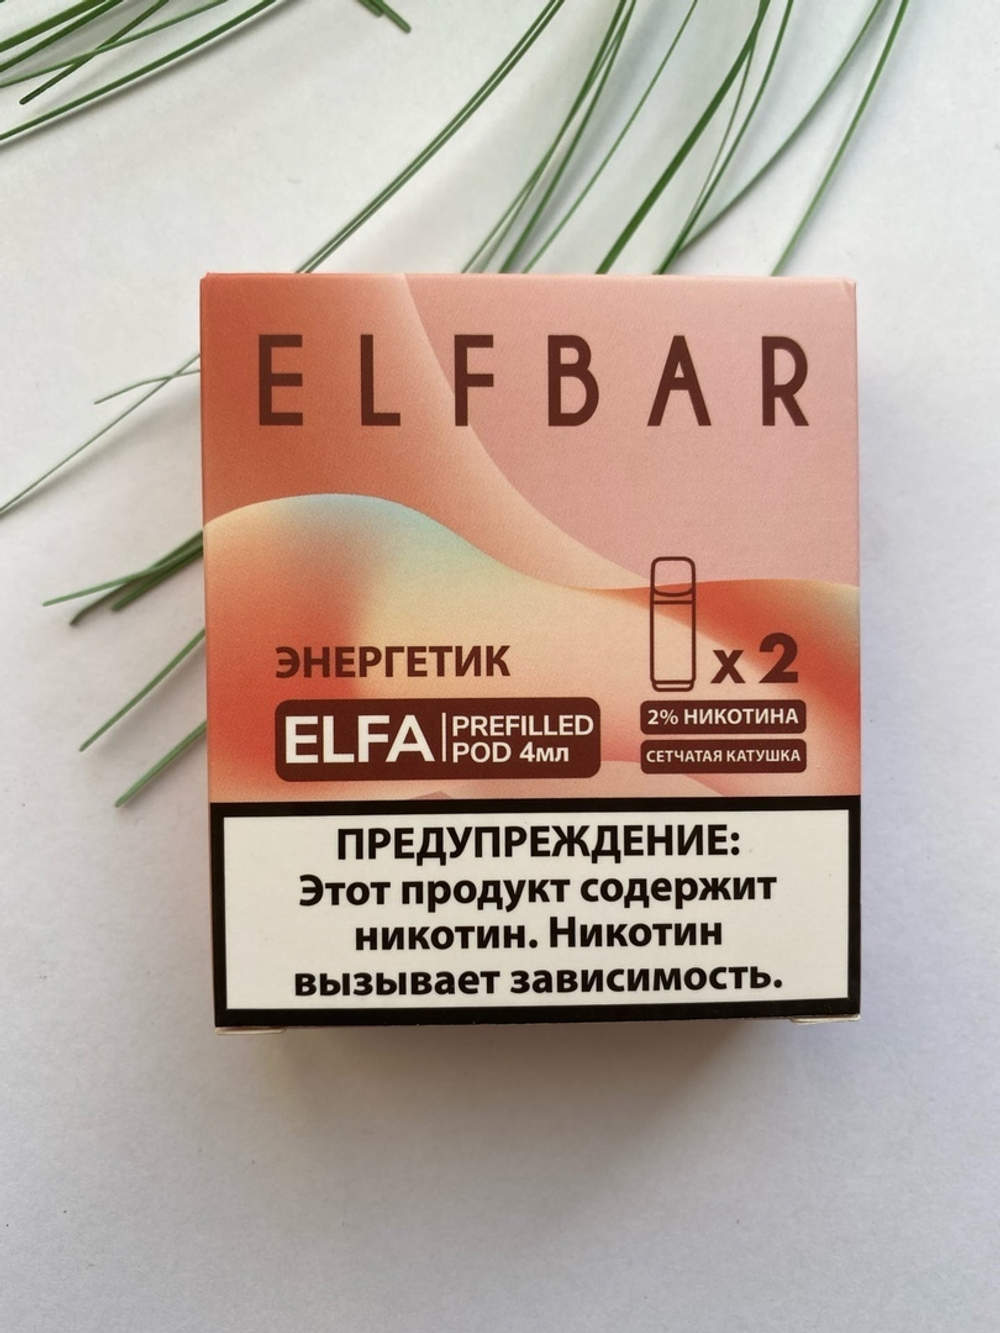 Картридж для ELFA by ElfBAR 4мл